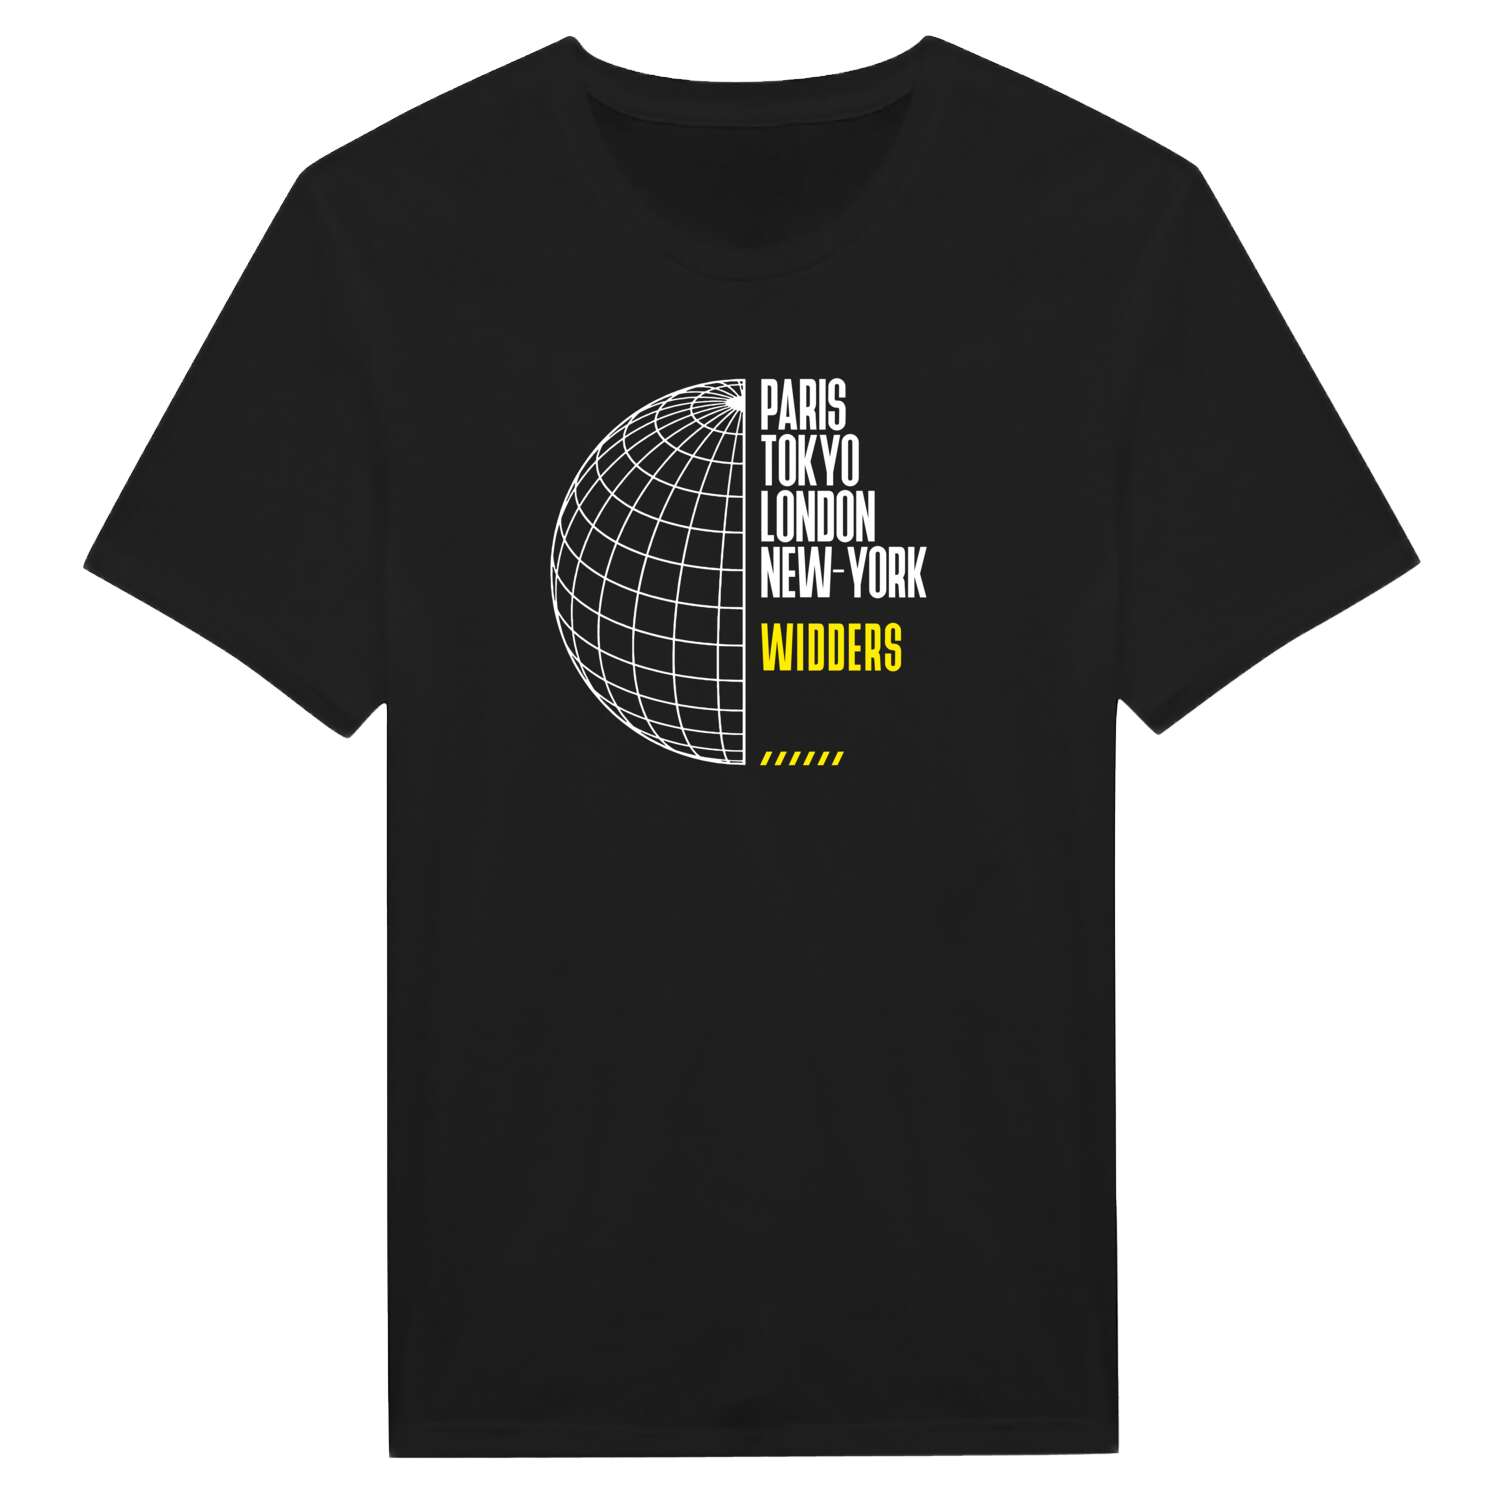 Widders T-Shirt »Paris Tokyo London«